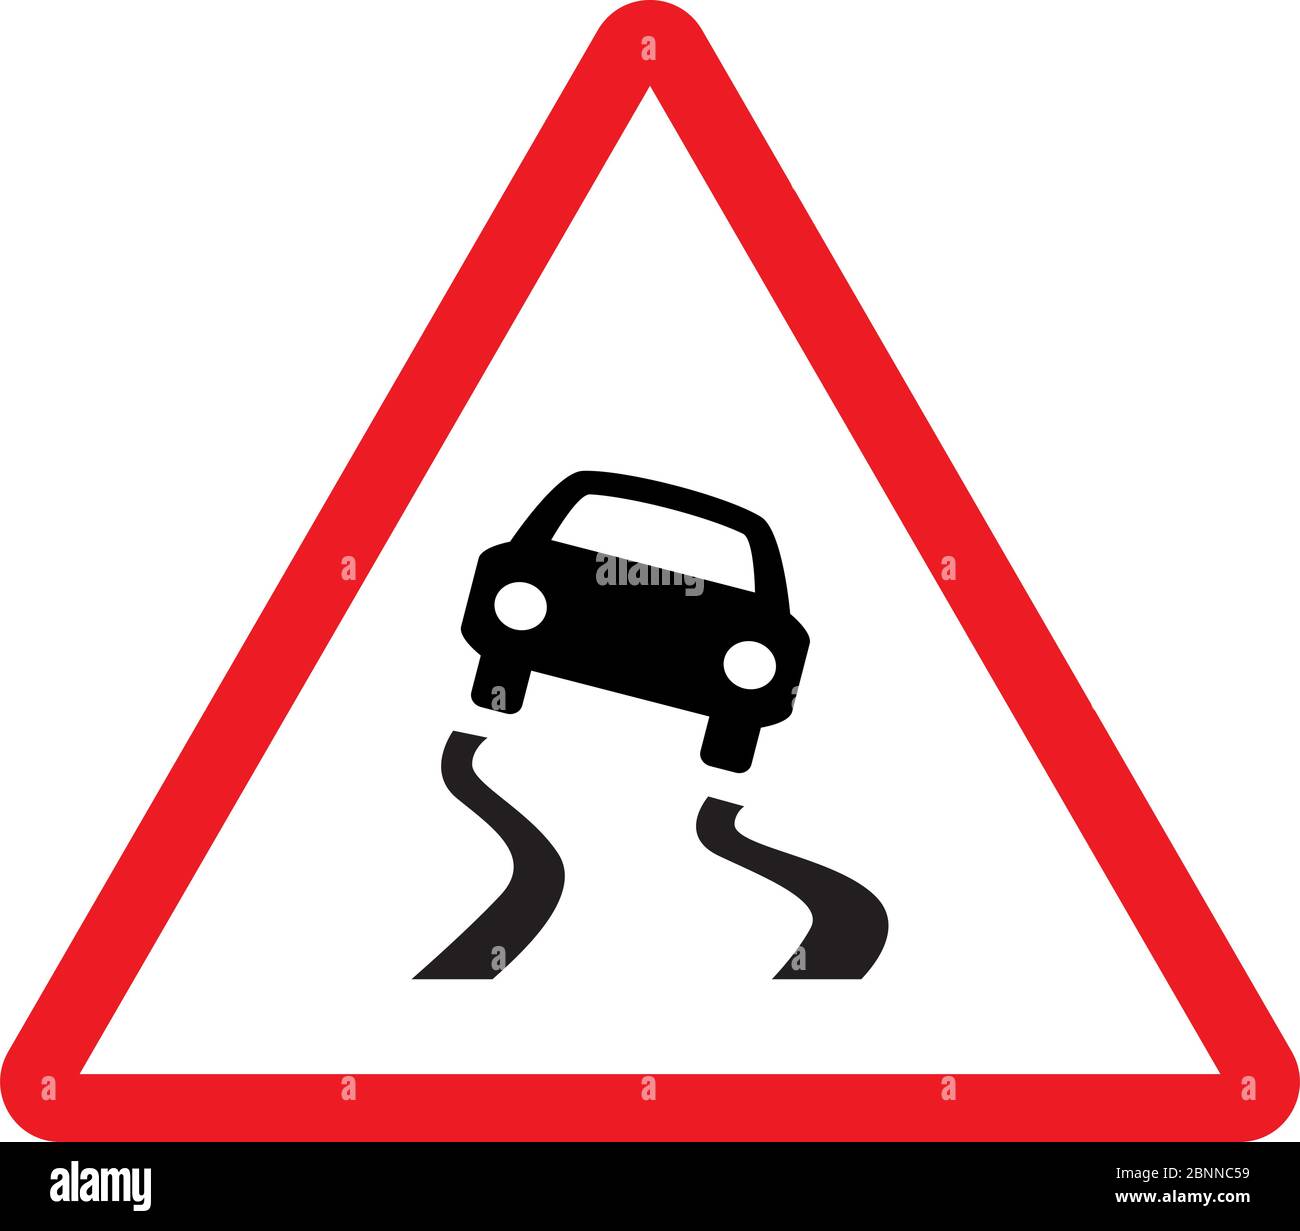 Slippery road traffic warning sign vector. Red triangle board. Road traffic symbols. Stock Vector